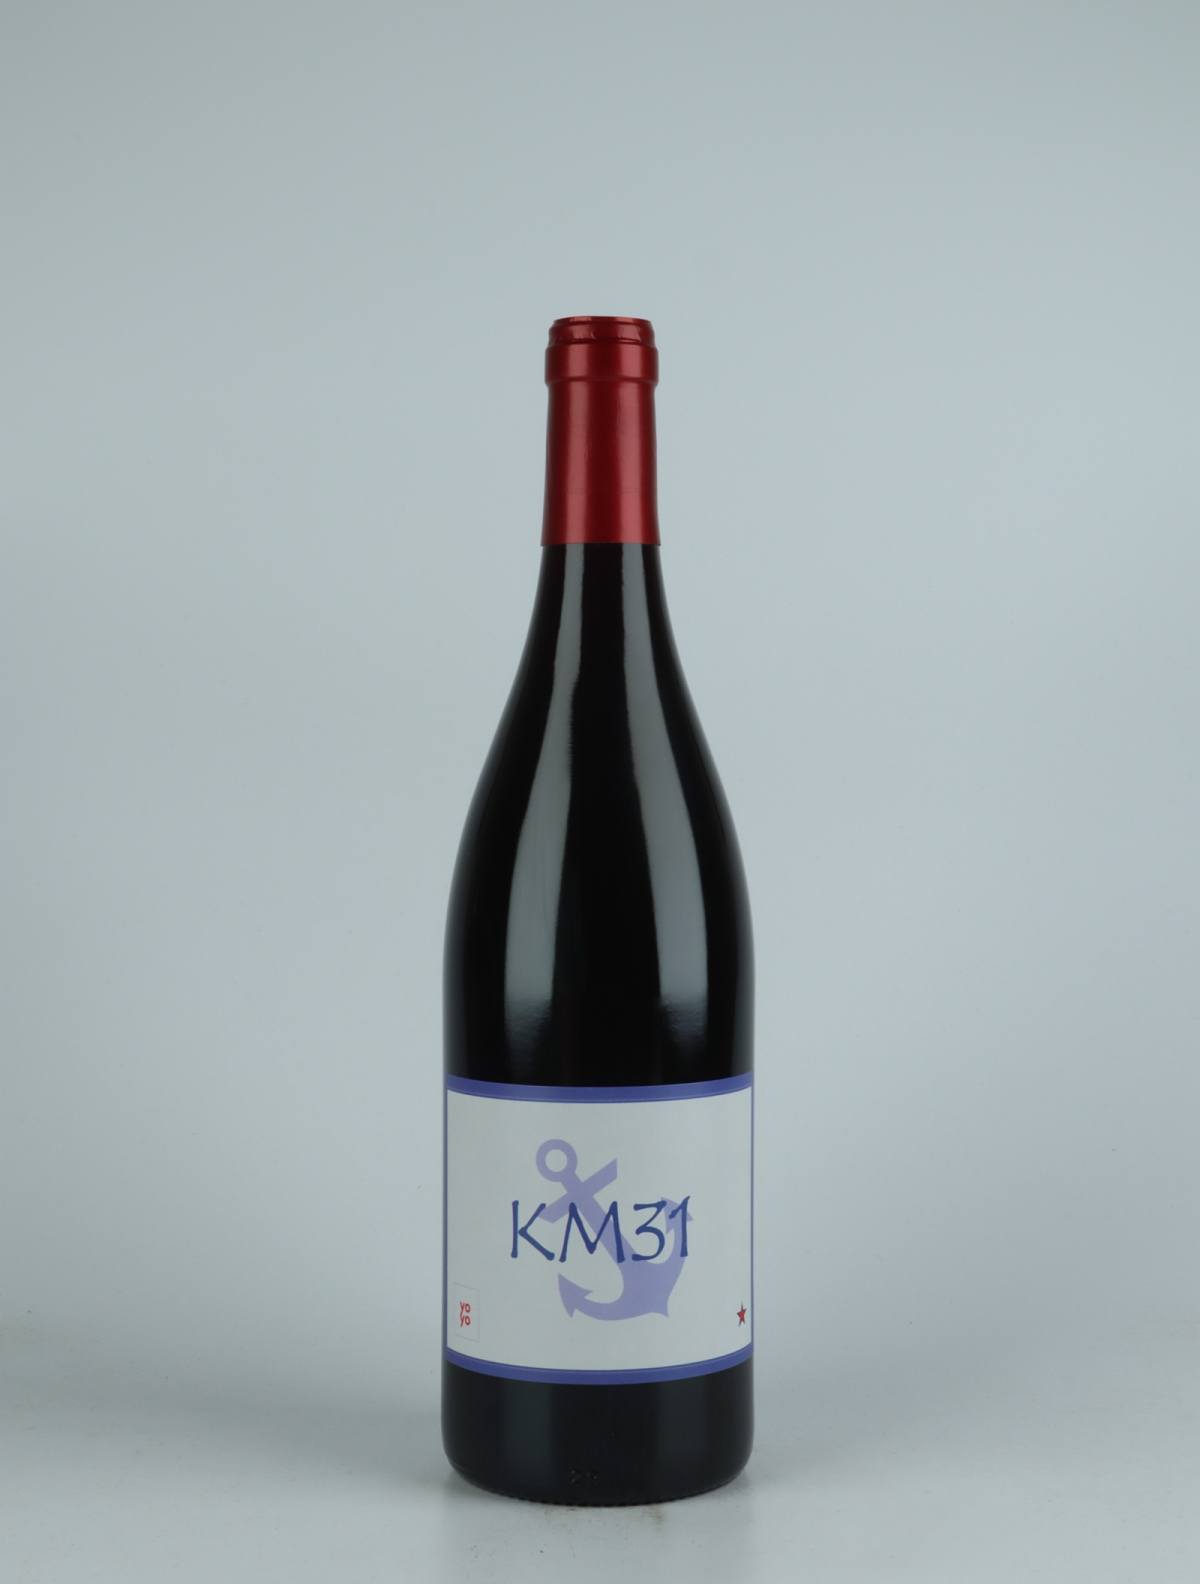 En flaske 2021 KM31 Rødvin fra Domaine Yoyo, Rousillon i Frankrig